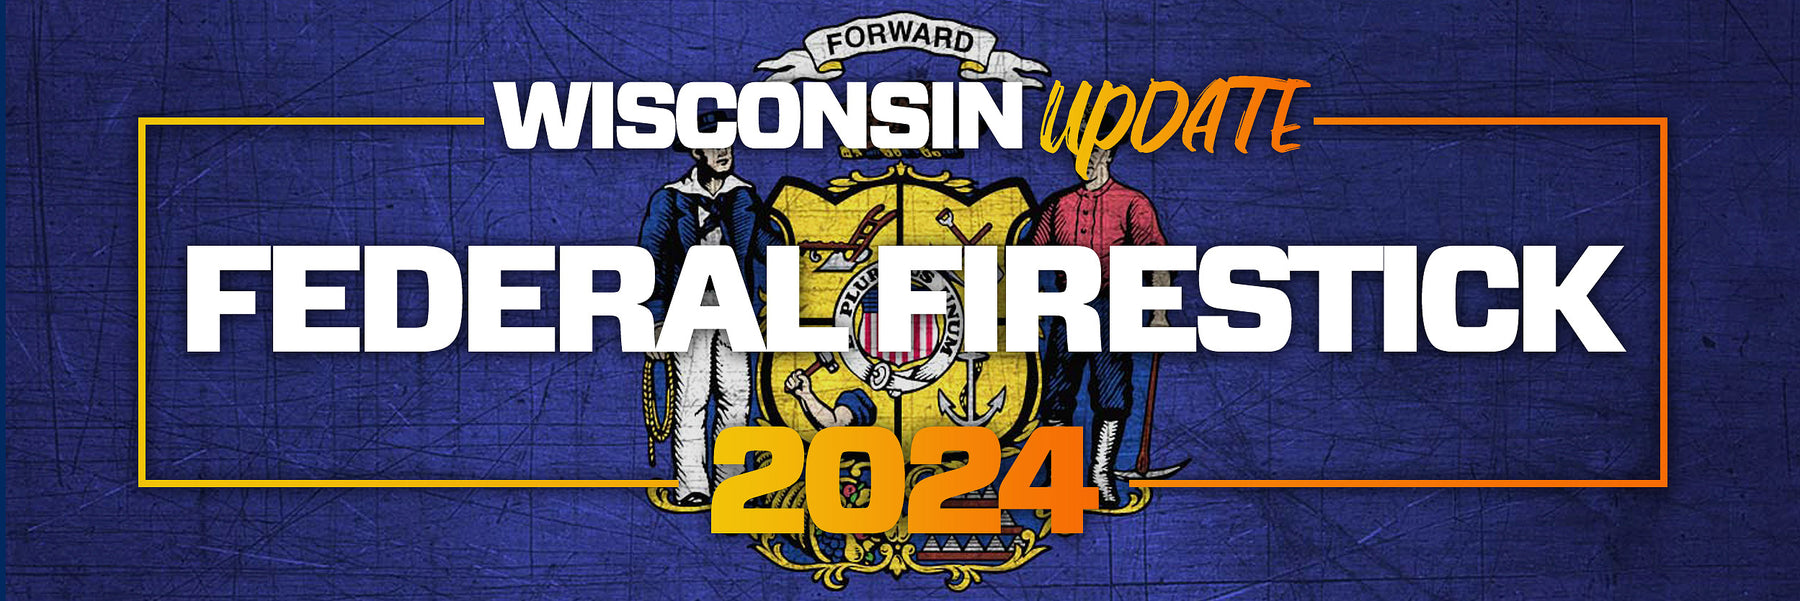 Firestick Ignition Now Legal In Wisconsin Muzzleloader Season